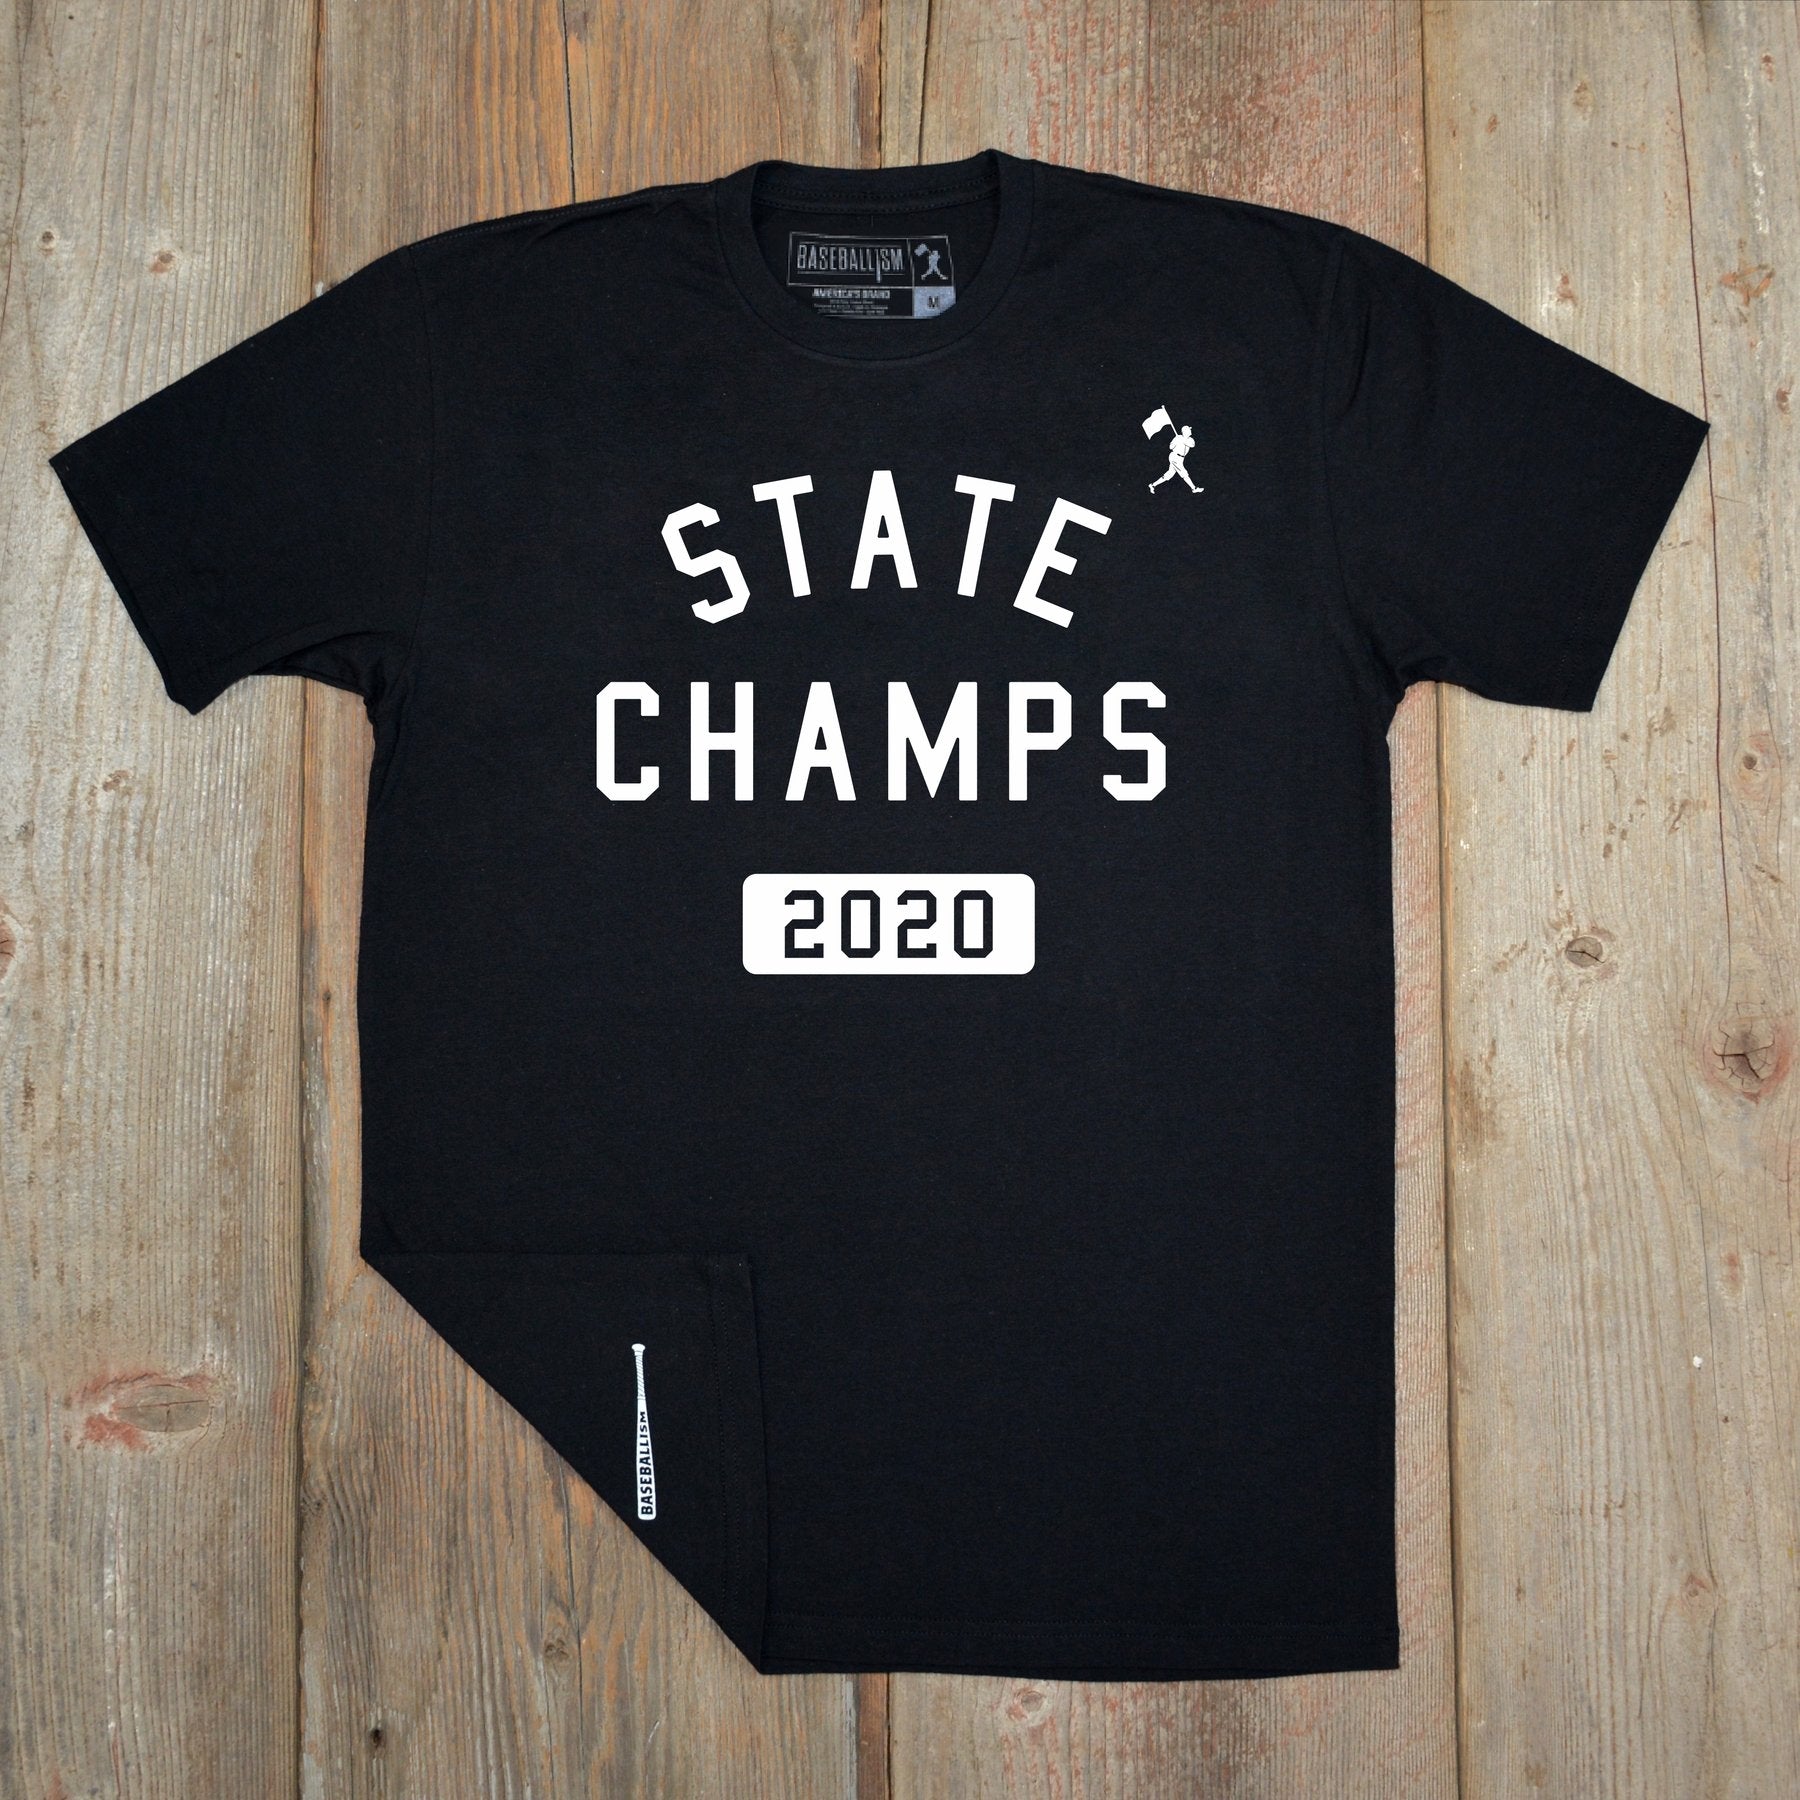 Baseballism - State Champs 2020 T-Shirt (Men's)